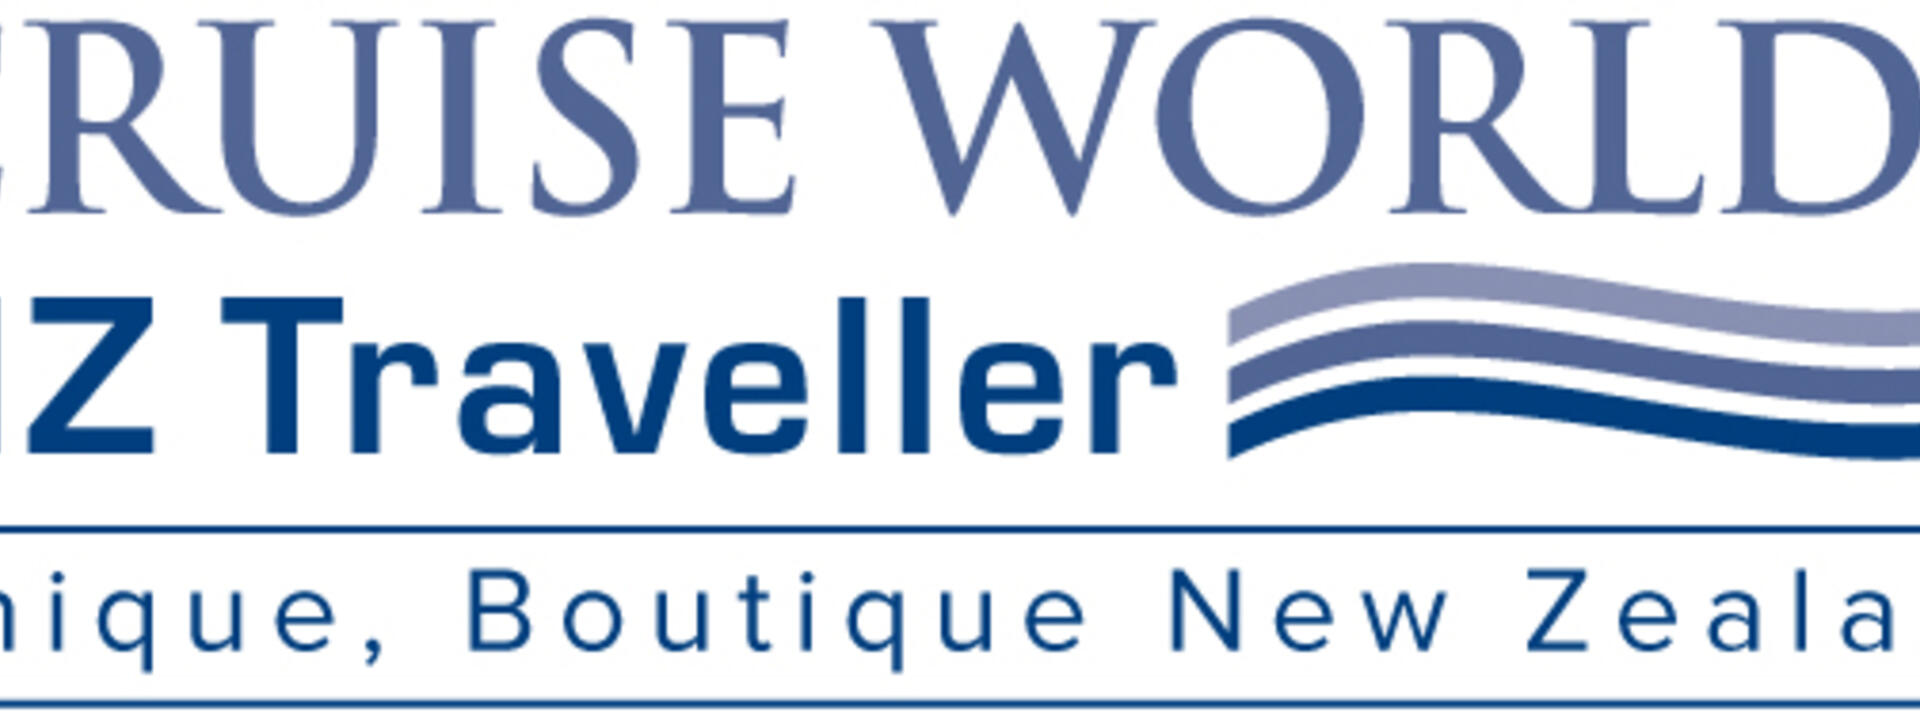 cw-nz-traveller-logo-large.jpg